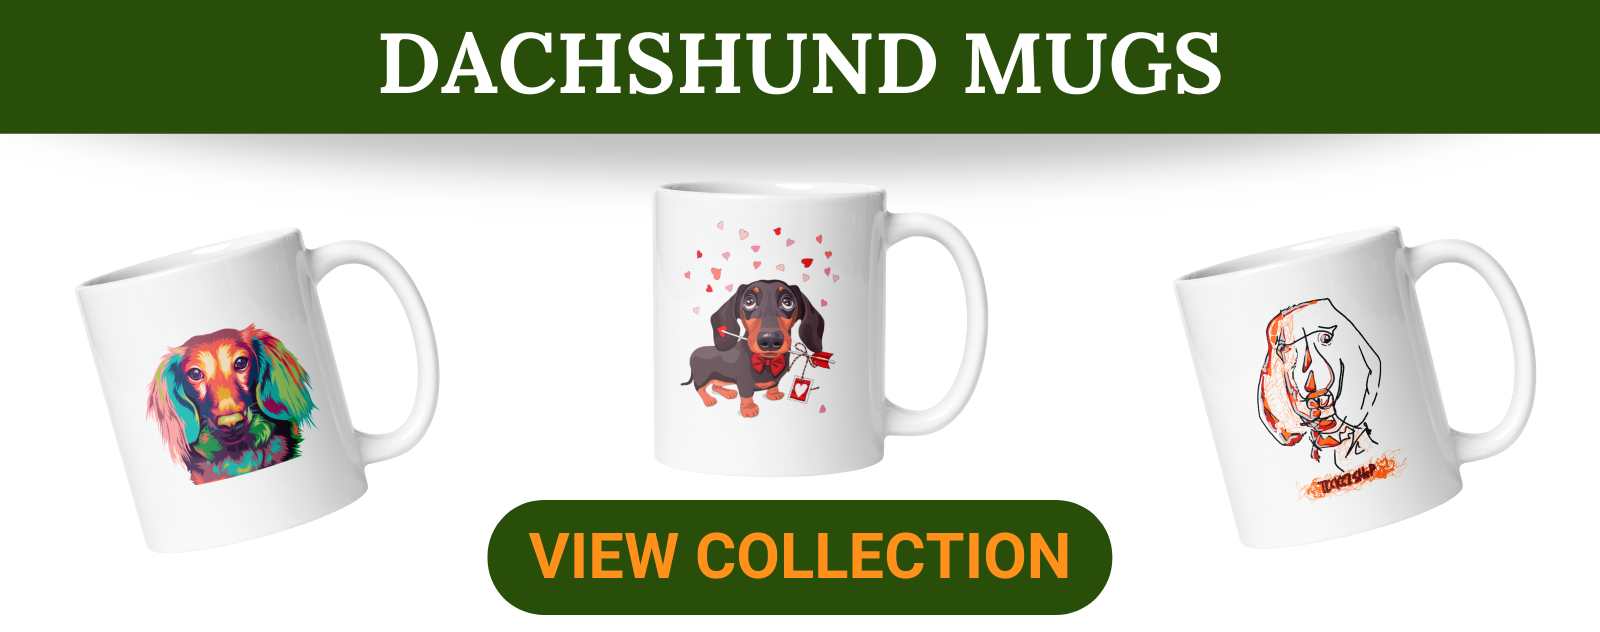 Dachshund Mugs Collection